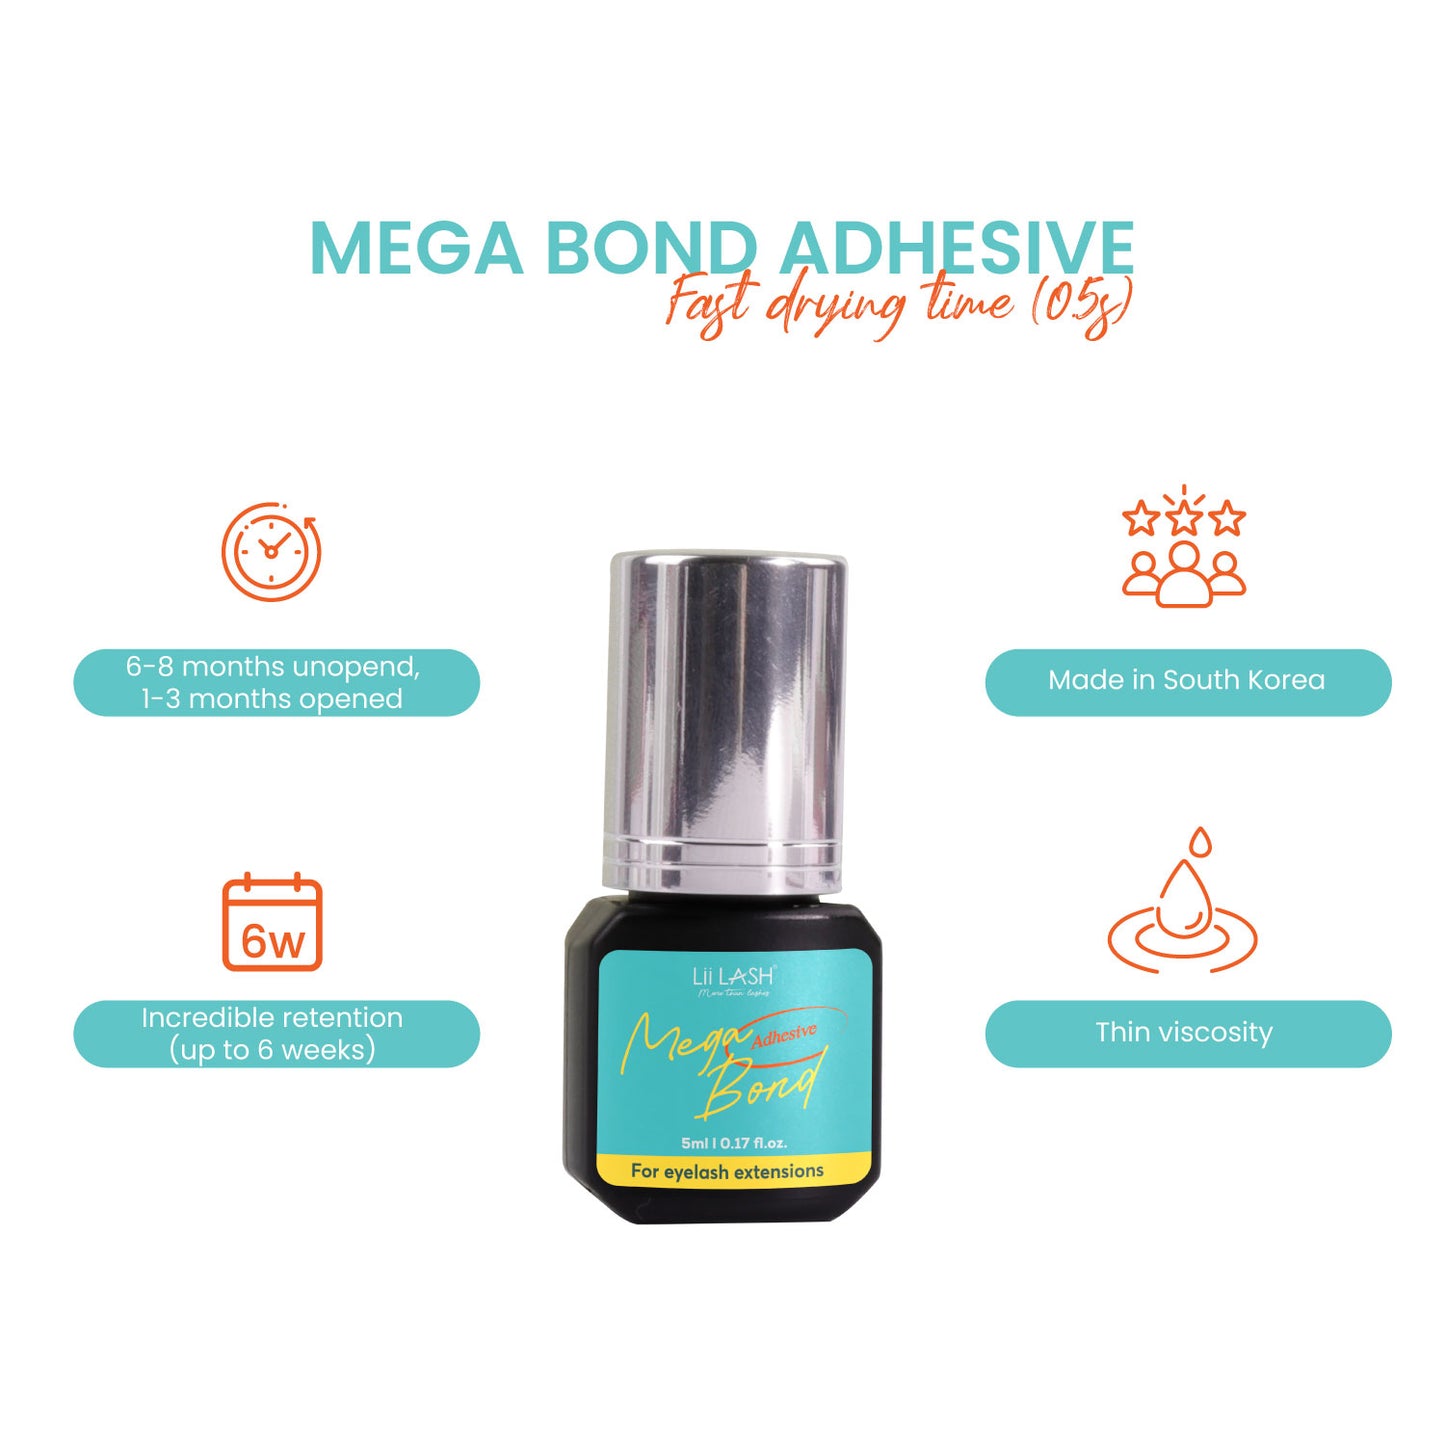 Mega-Bond-Adhesive-key-features-2